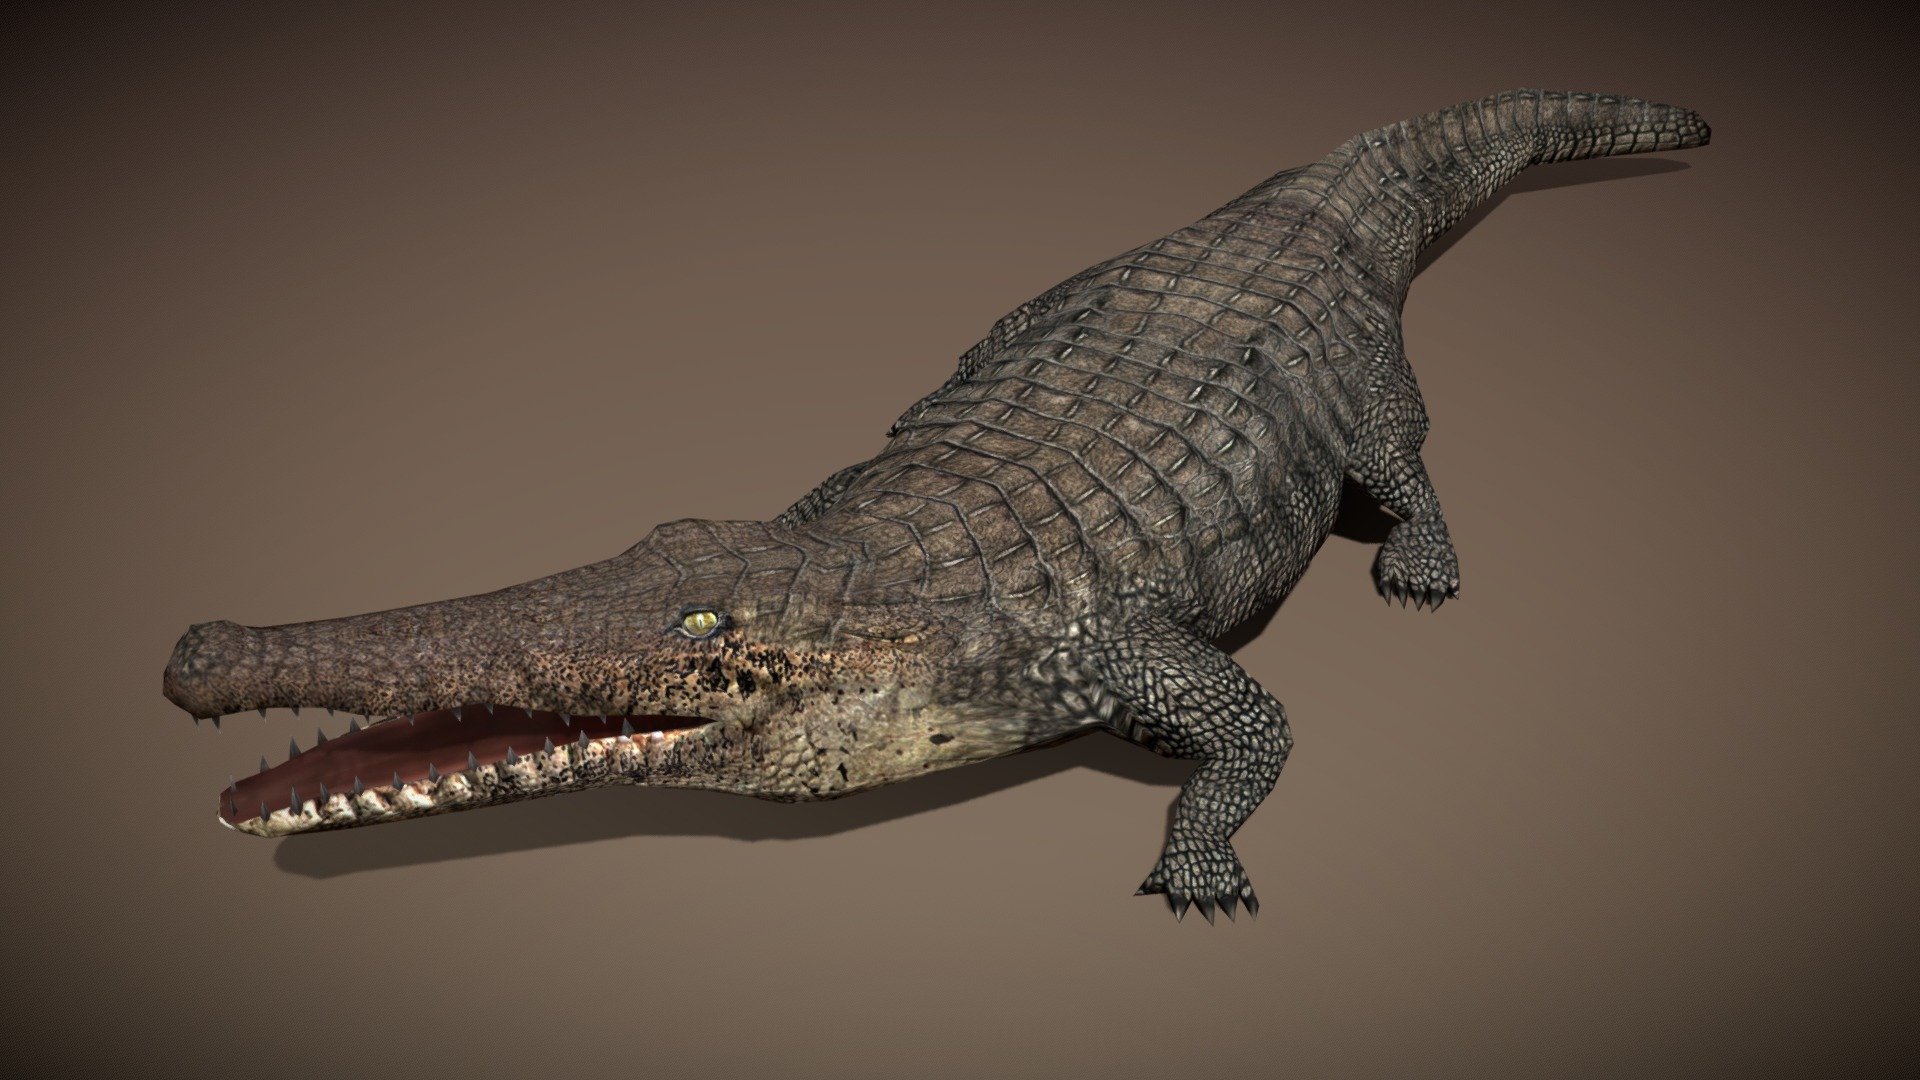 Safari Animals Crocodile Buy Royalty Free 3d Model By 3drt Com 3drt Com Ed93f01